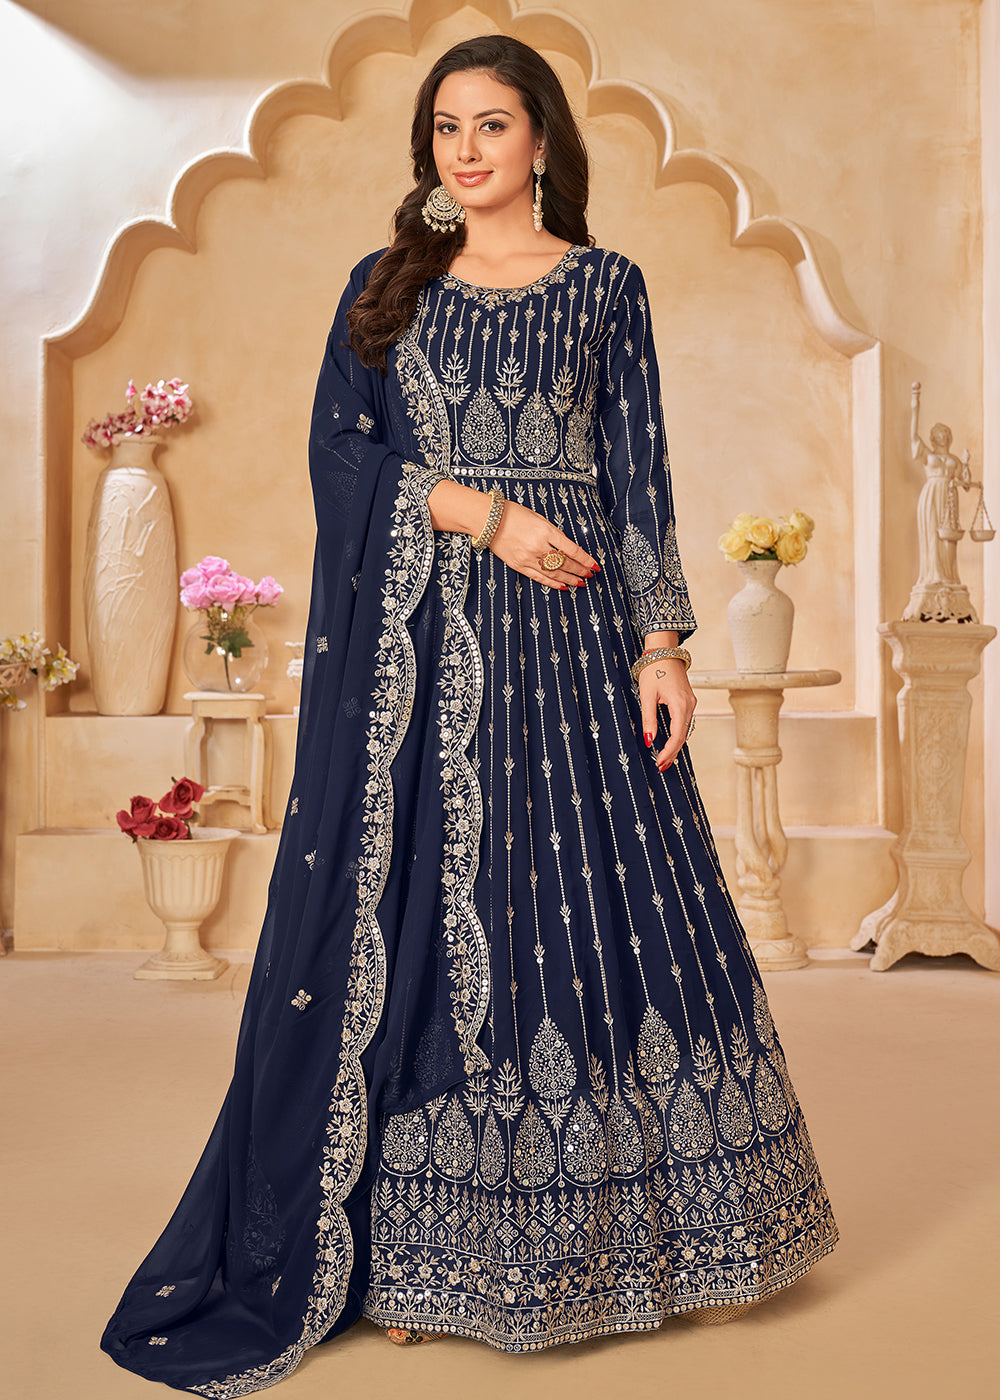 Buy Now Navy Blue Resham Zari Embroidered Festive Anarkali Suit Online in USA, UK, Australia, New Zealand, Canada & Worldwide at Empress Clothing.